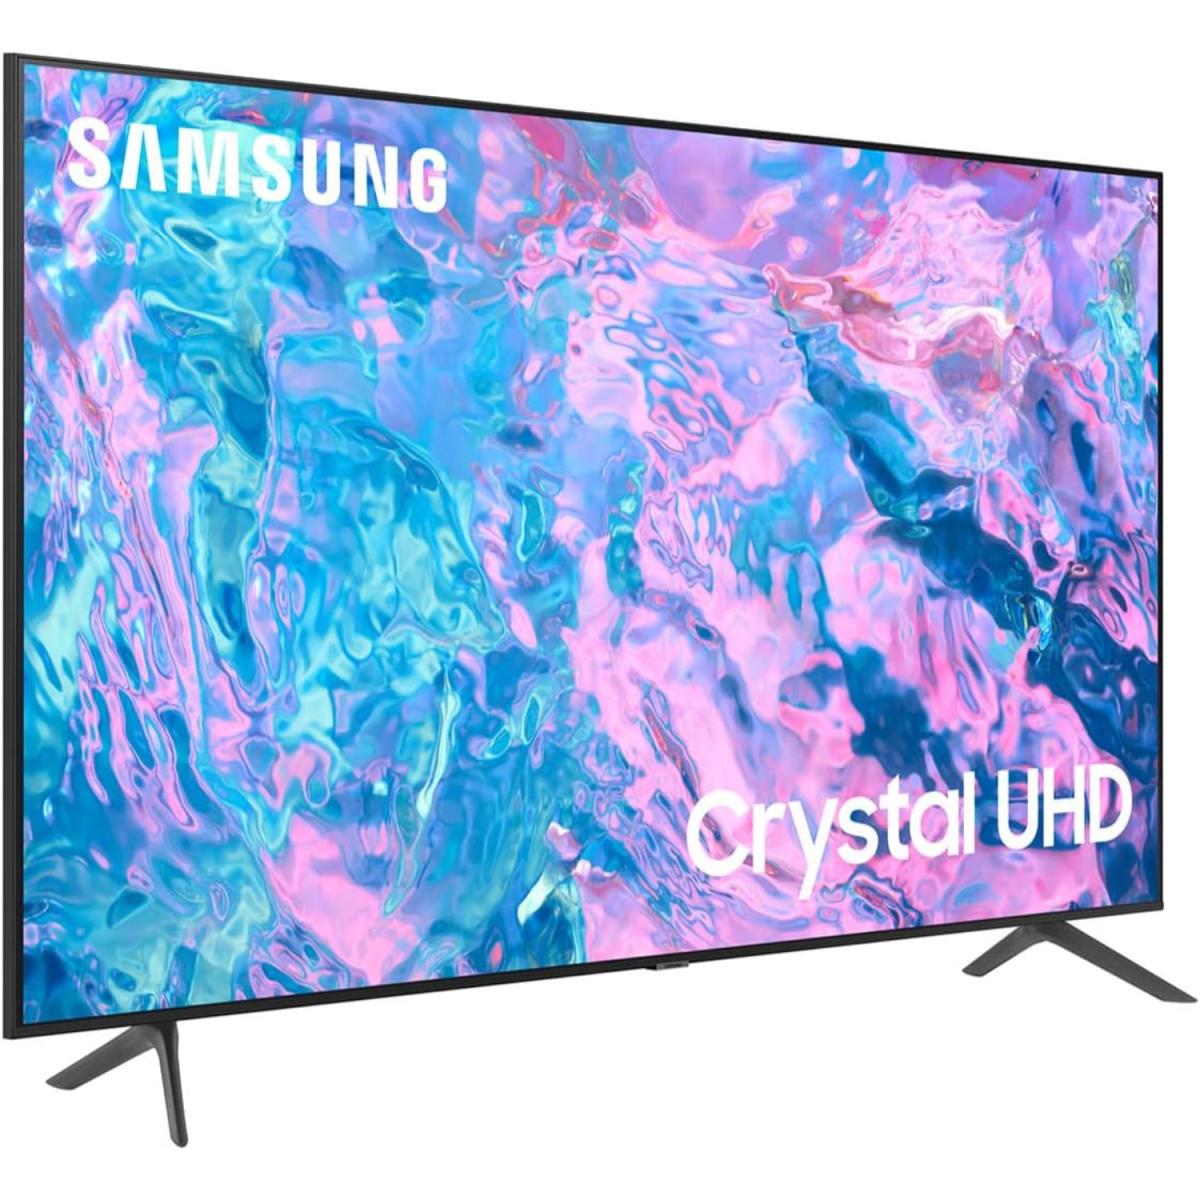 TV SAMSUNG LED 58" SMART CRYSTAL UHD